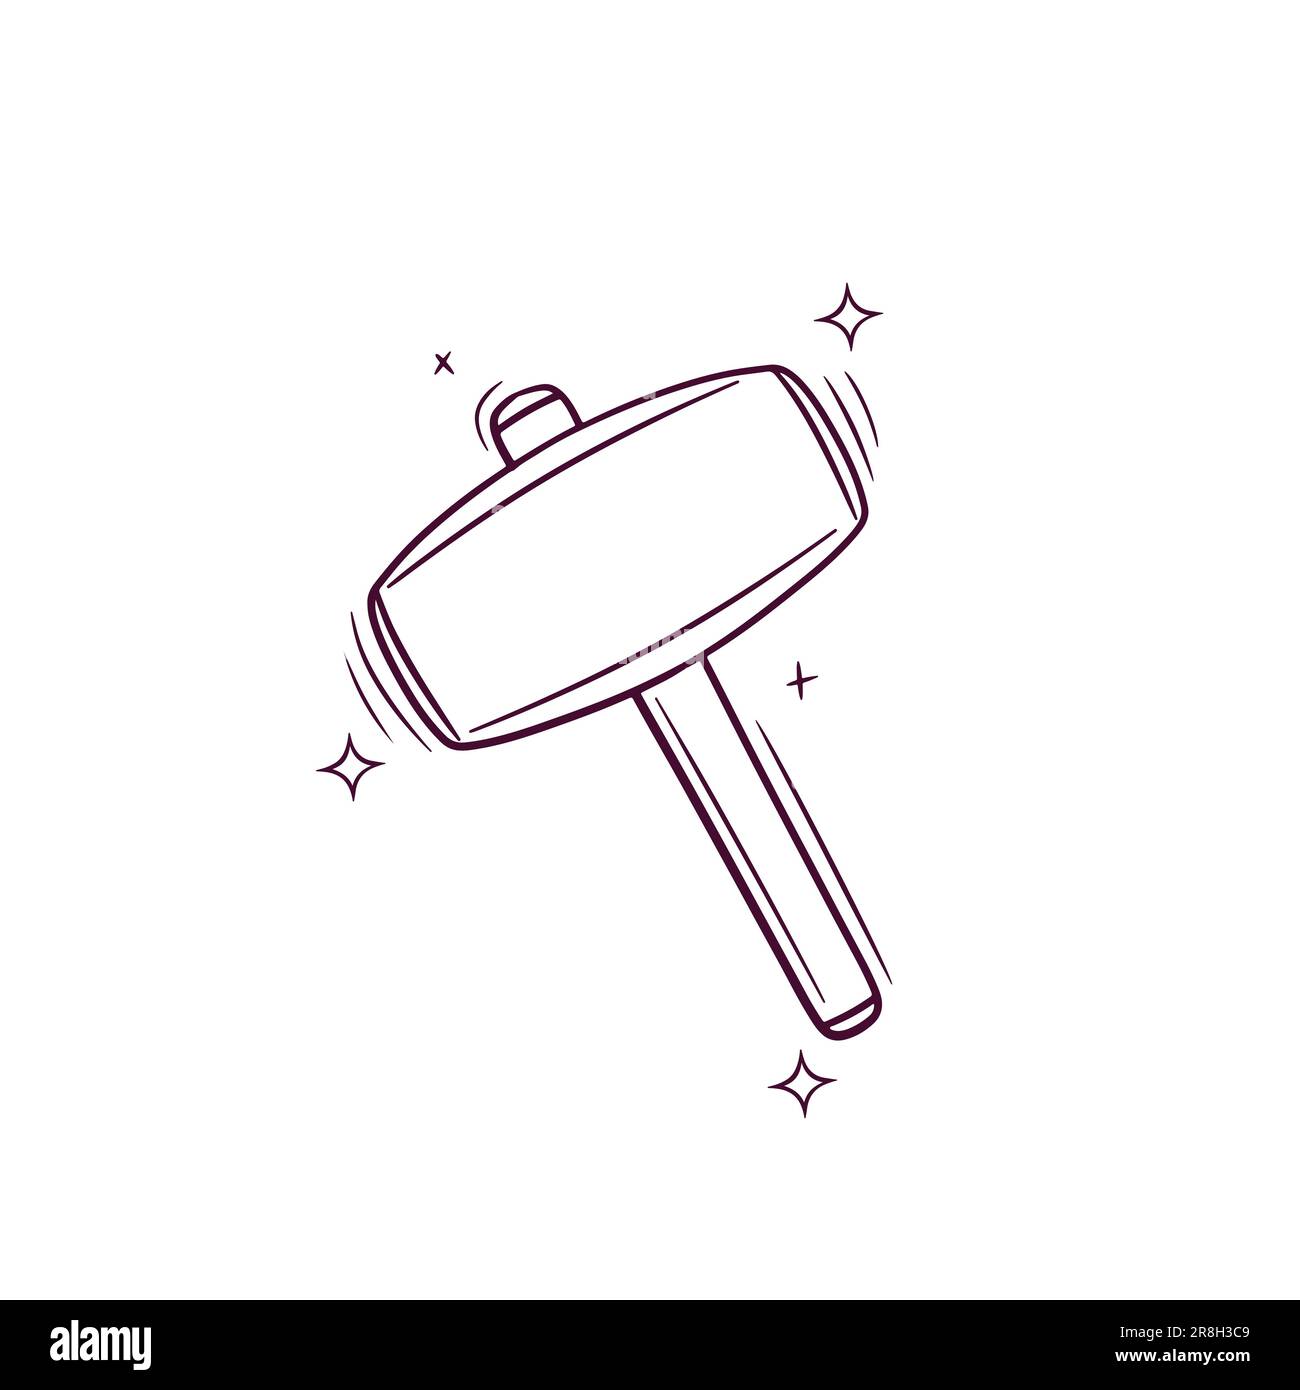 Hand Drawn Sledge Hammer. Doodle Vector Sketch Illustration Stock Vector